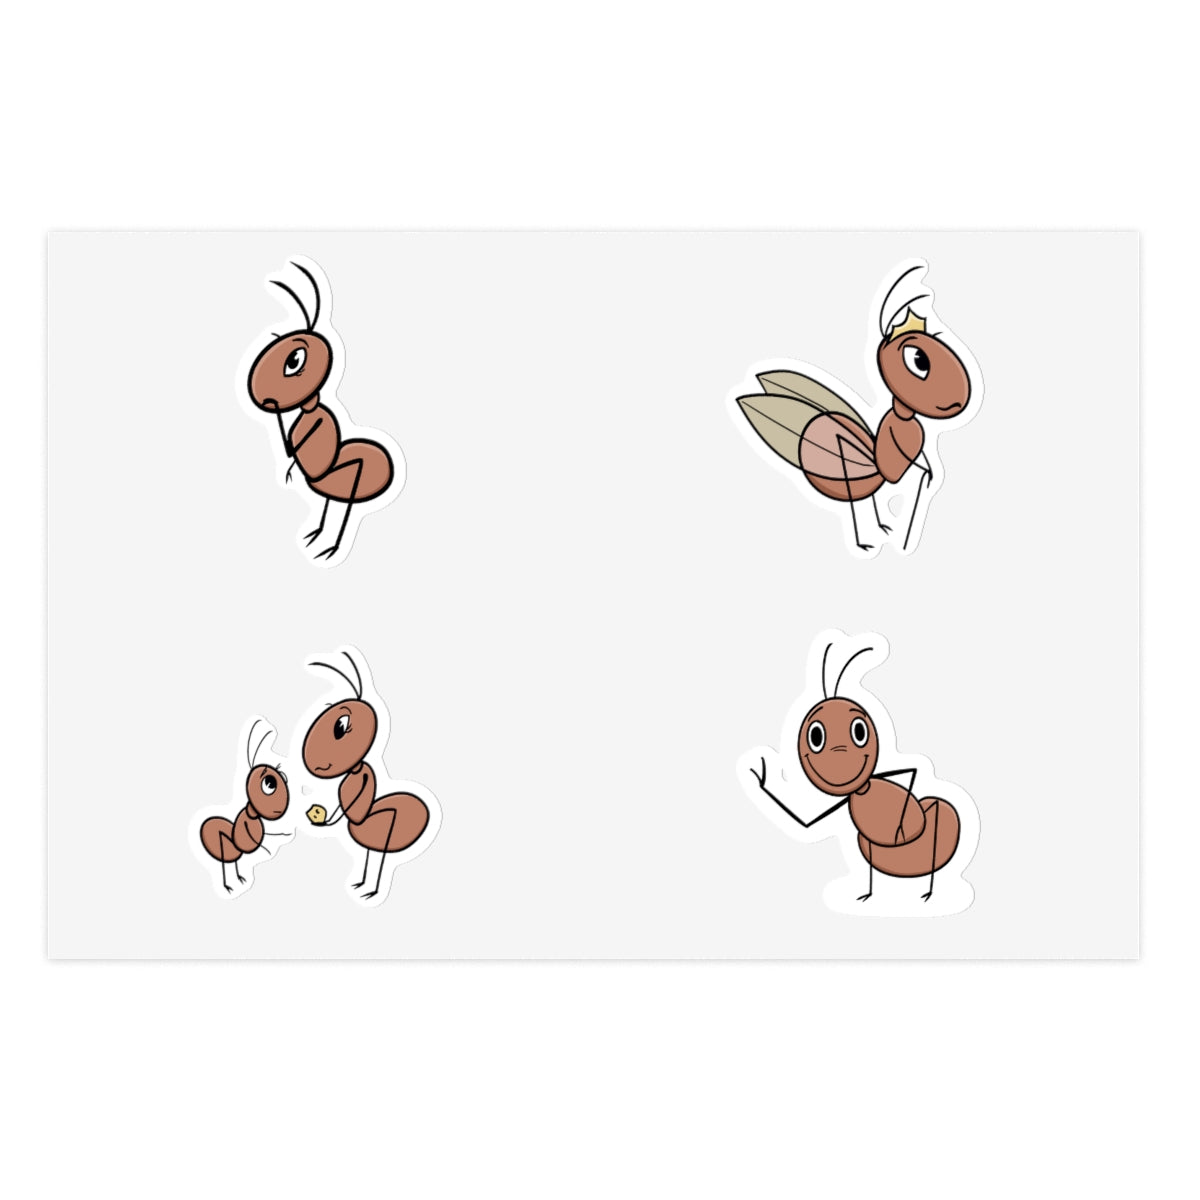 My Giddy Ant - Sticker Sheet 2